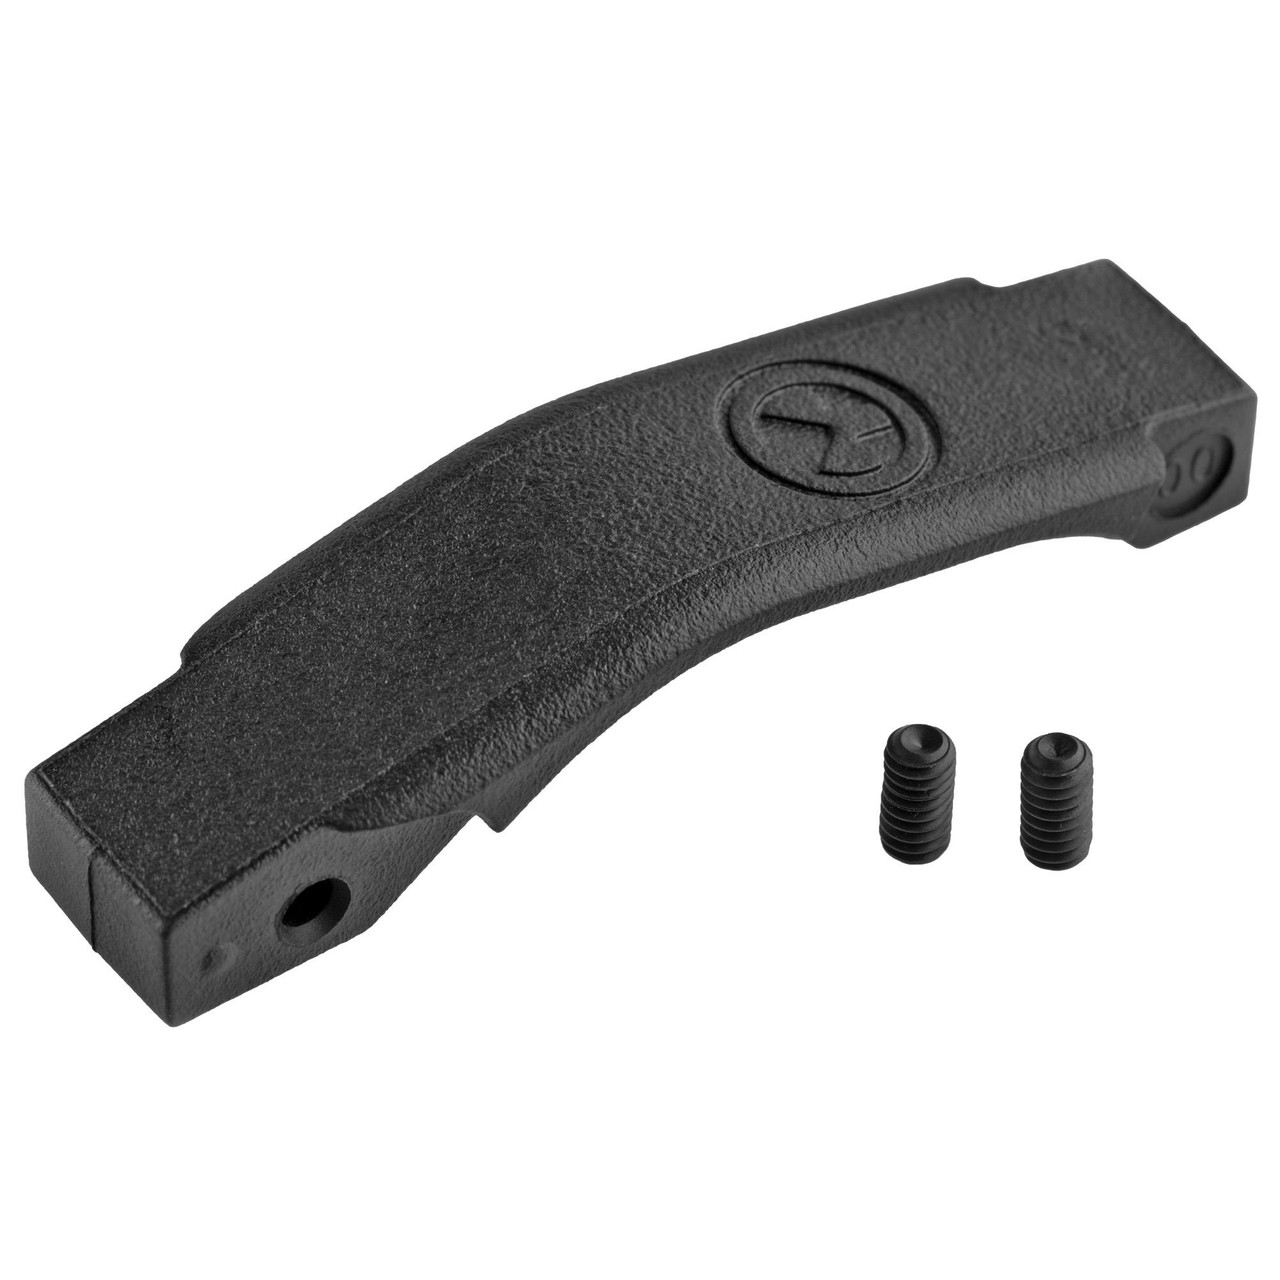 Magpul MOE Polymer Enhanced Trigger Guard, Black